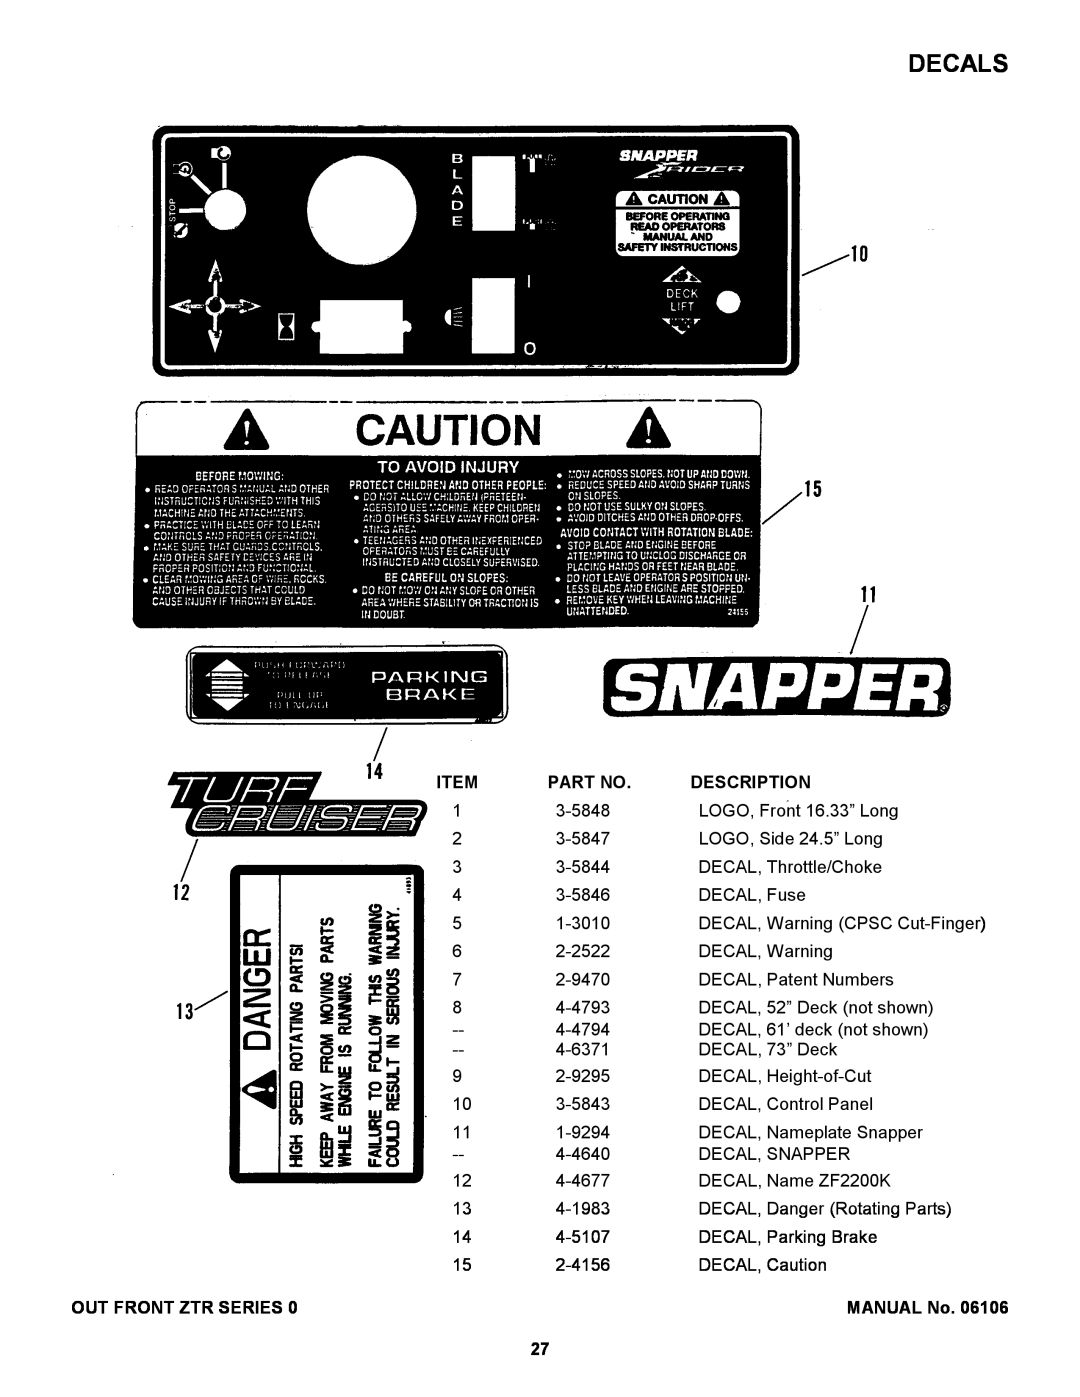 Snapper ZF2500KH, ZF2200K manual Description, Out Front Ztr Series, MANUAL No 